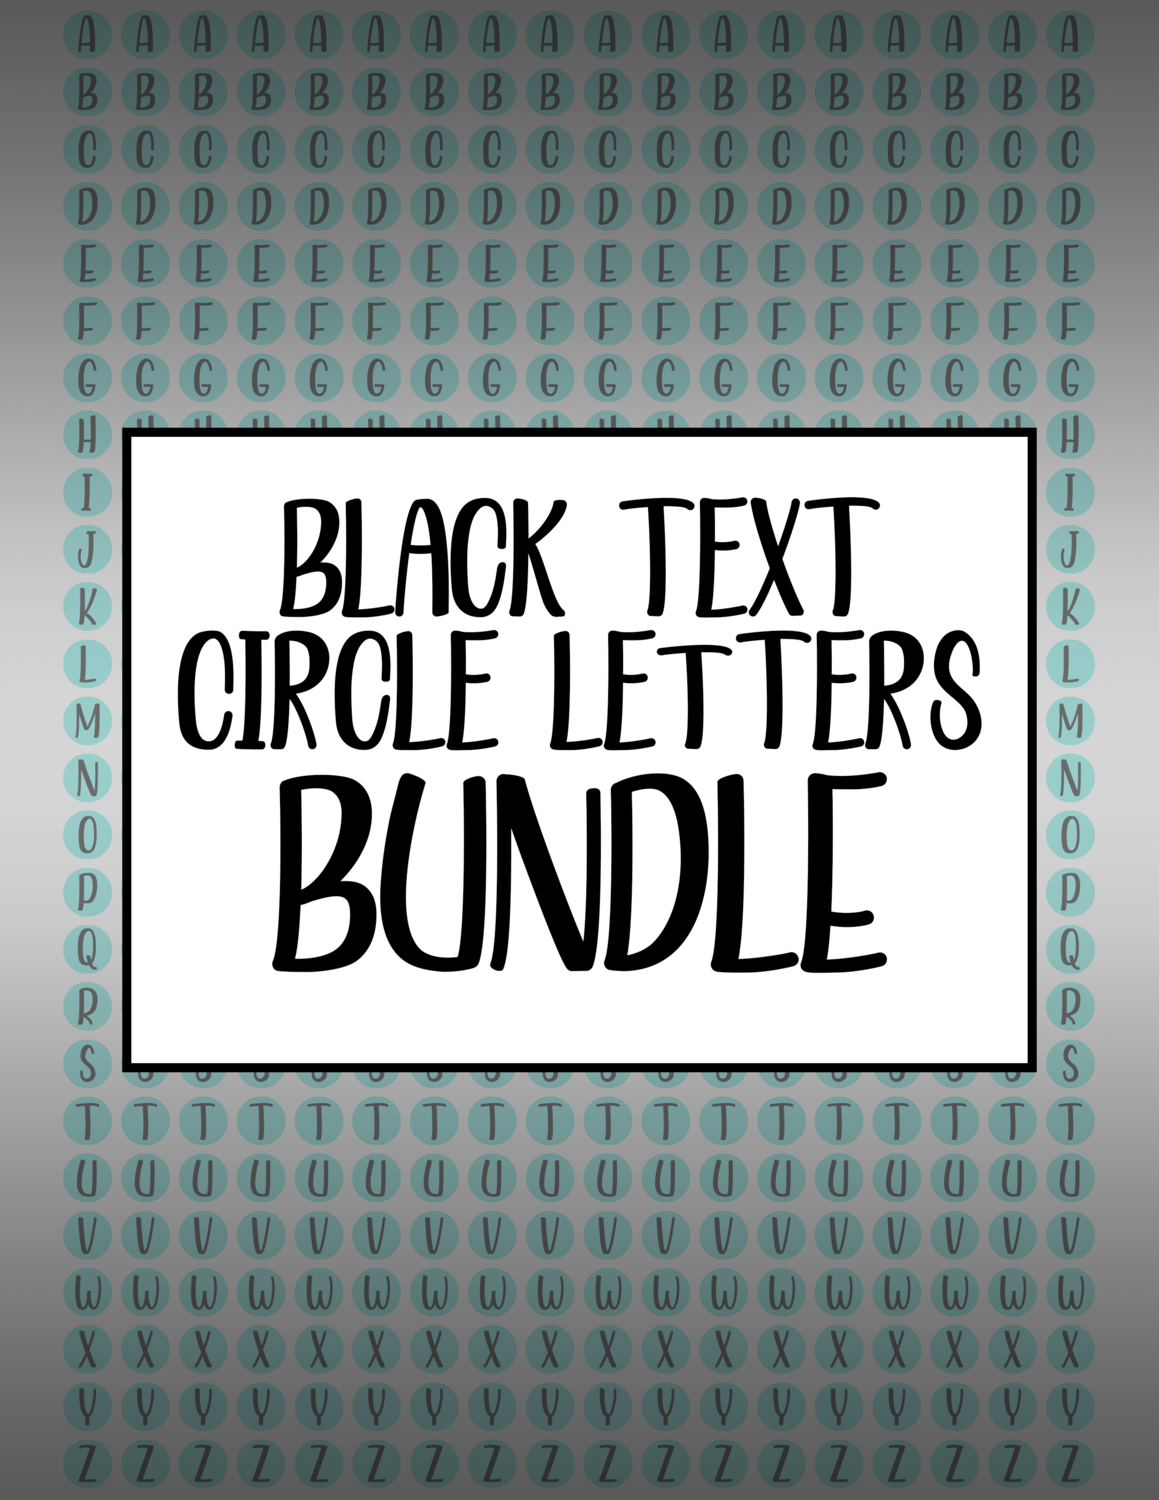 Bundle #27 "Feeling Good" Circle Letters - Black Text